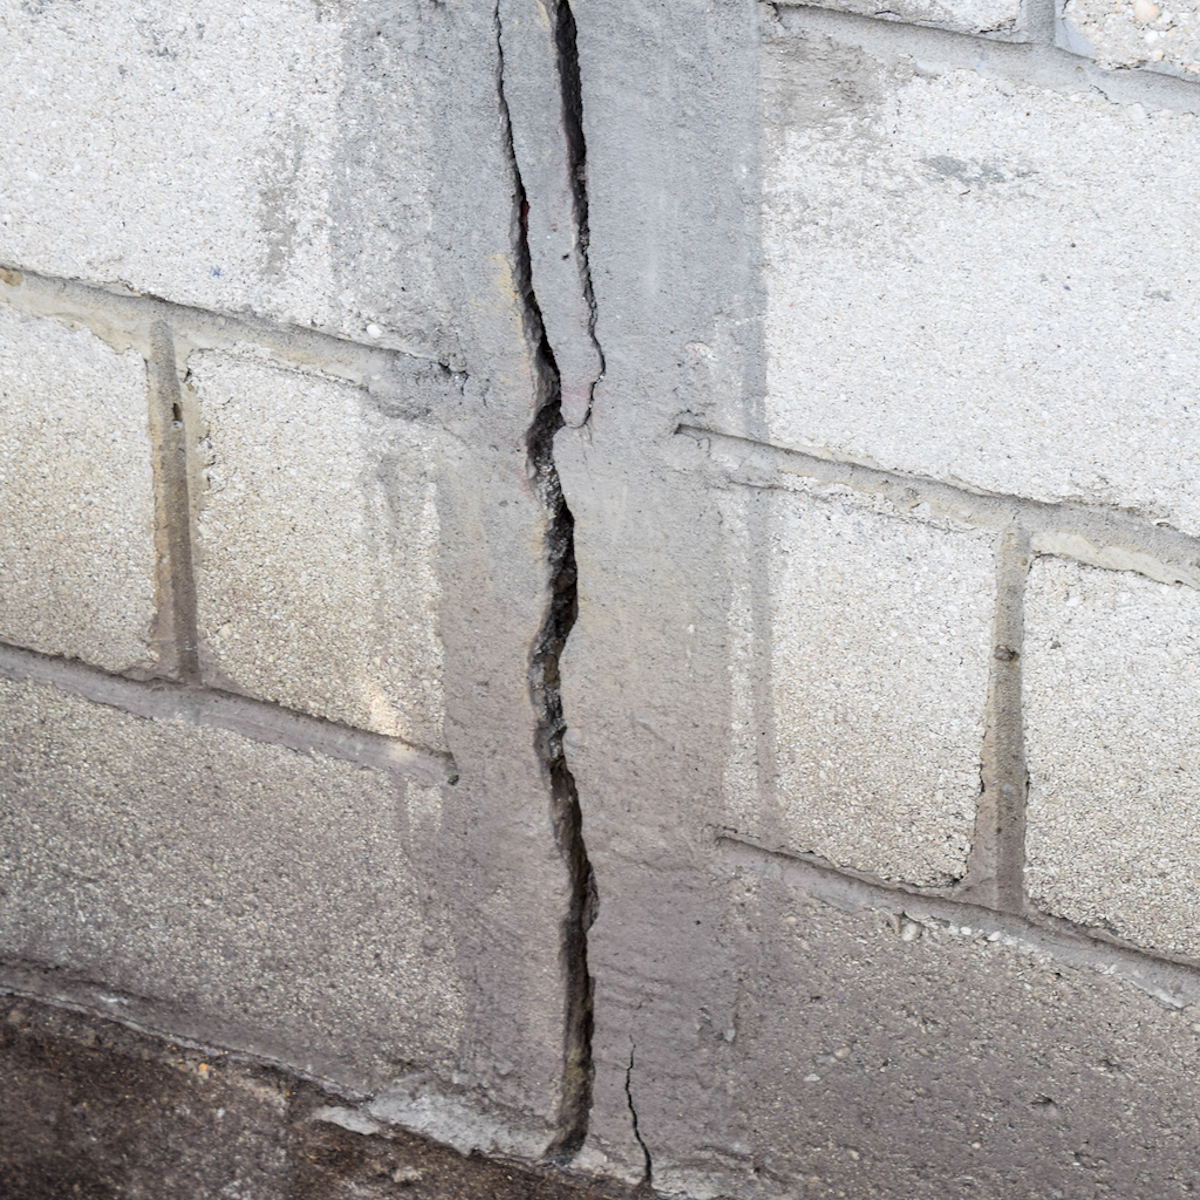 large cracks in foundation sign of structural damage